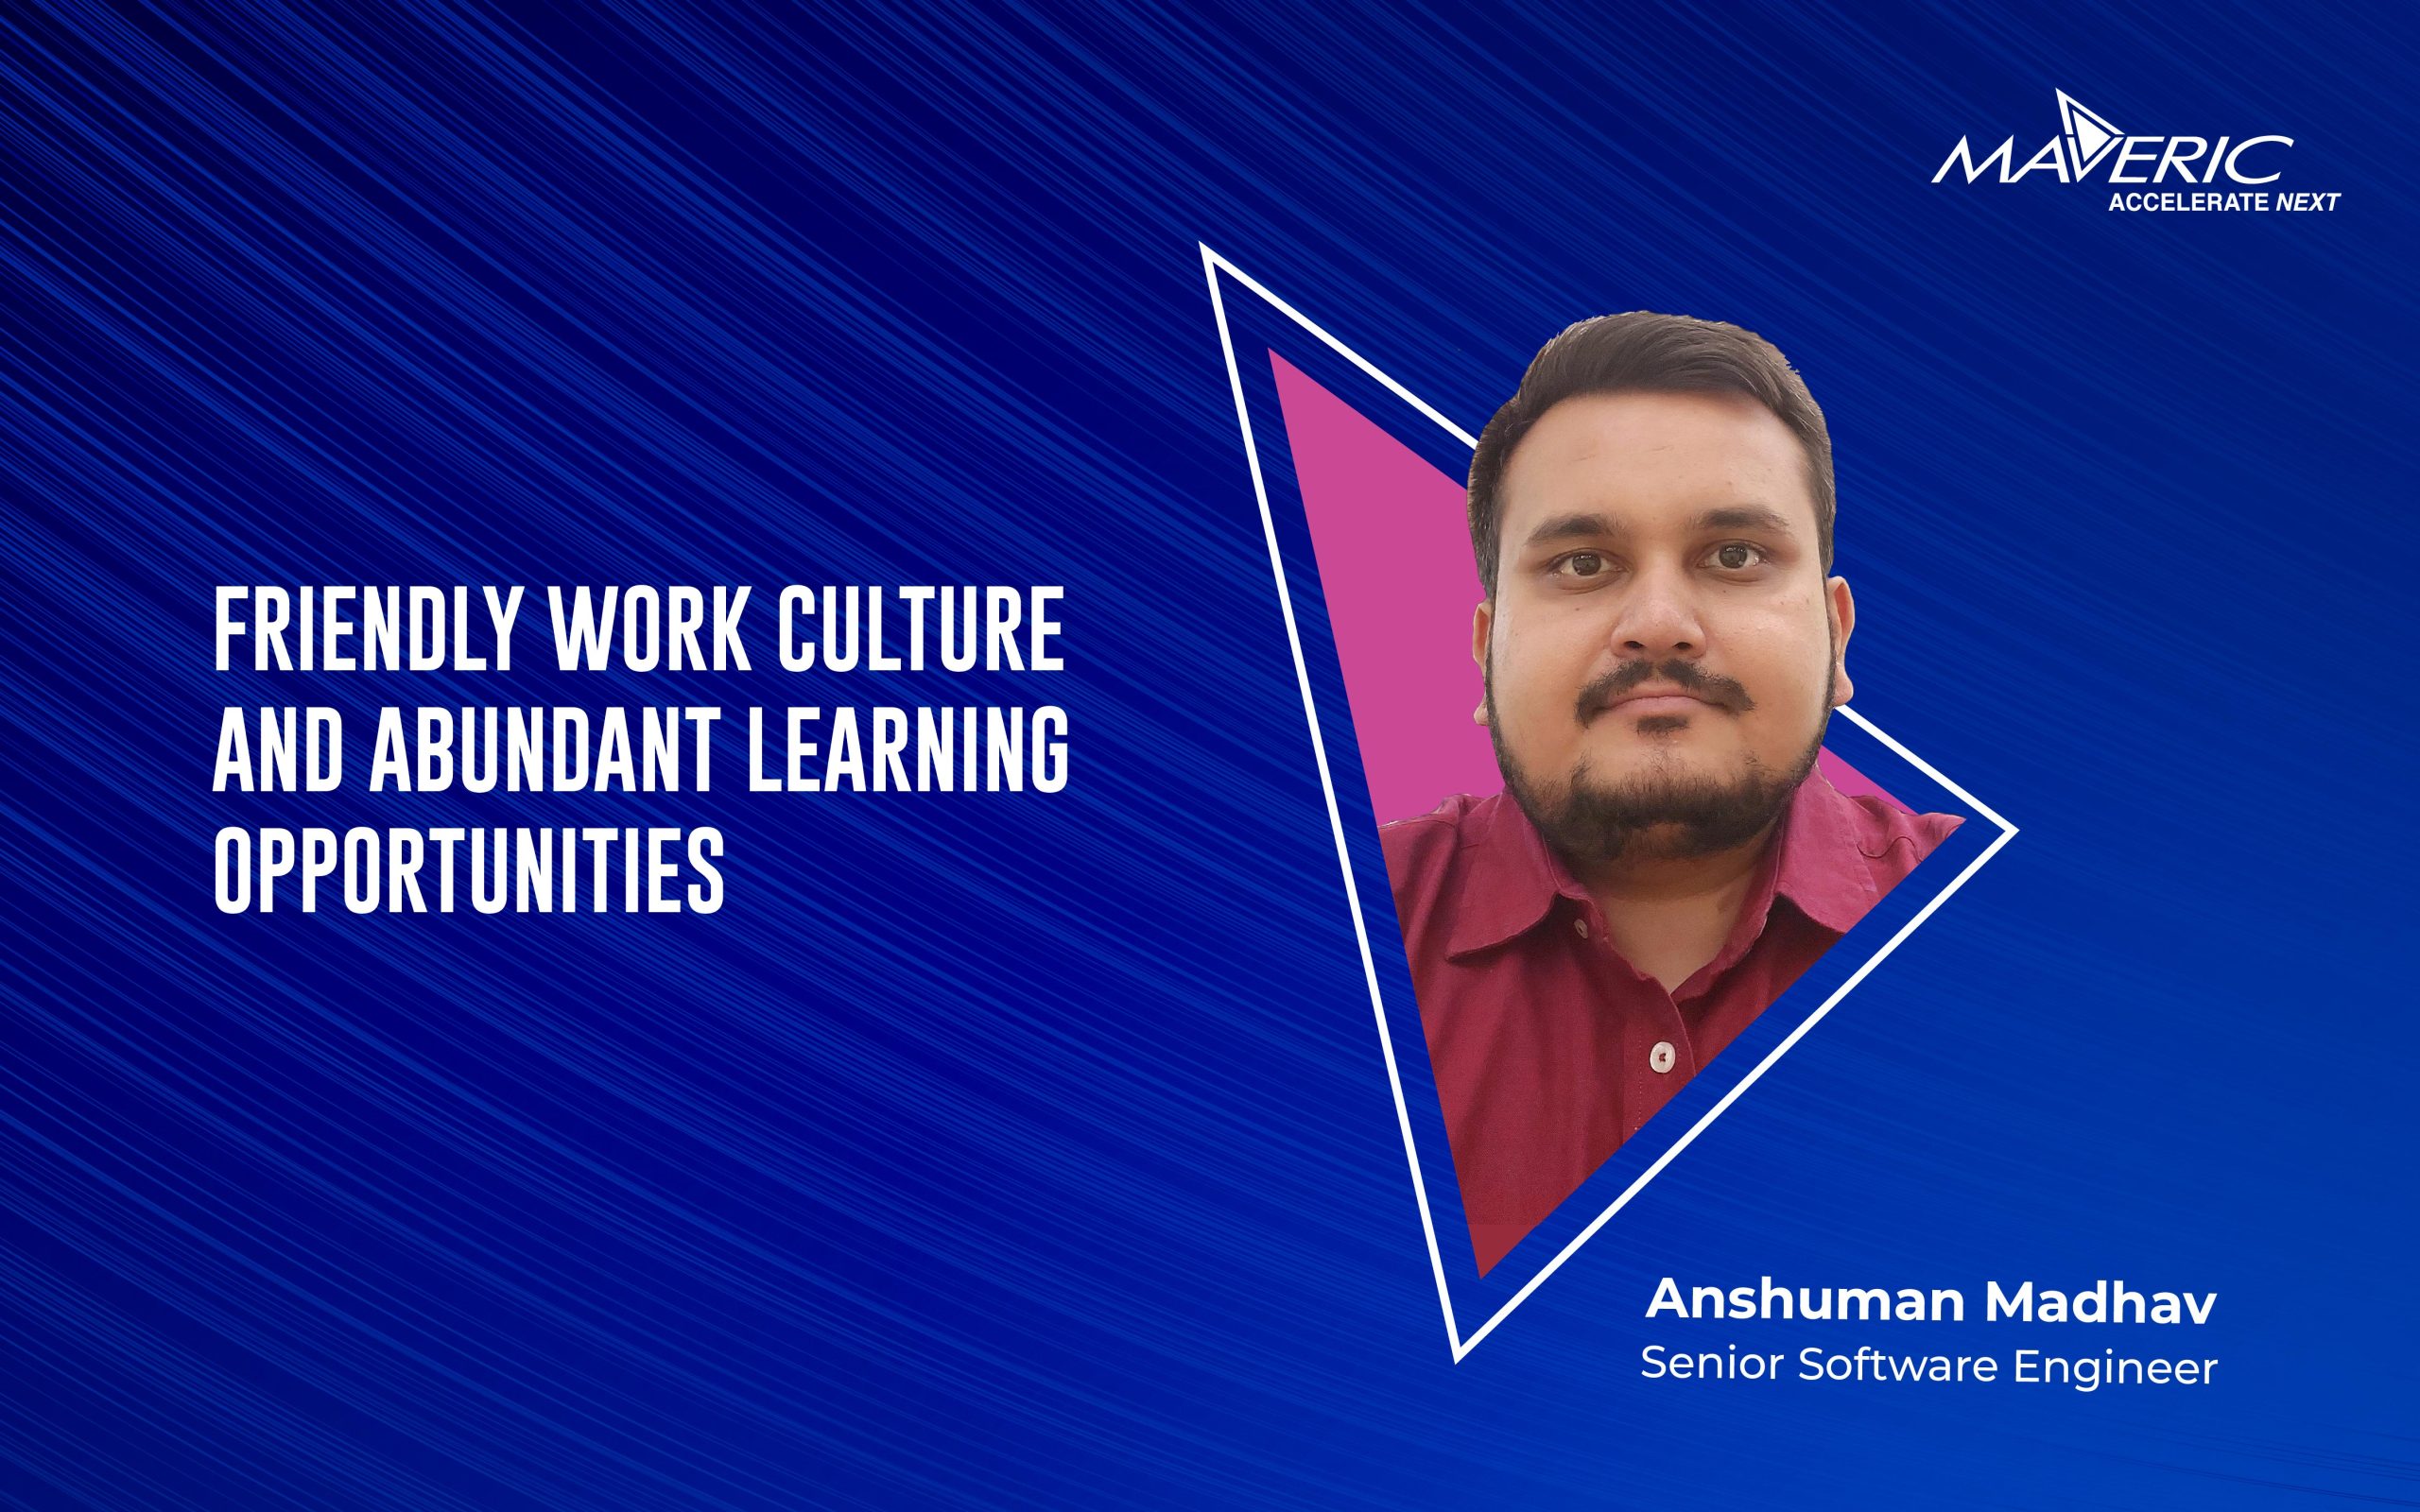 Anshuman Madhav – Senior Software Engineer